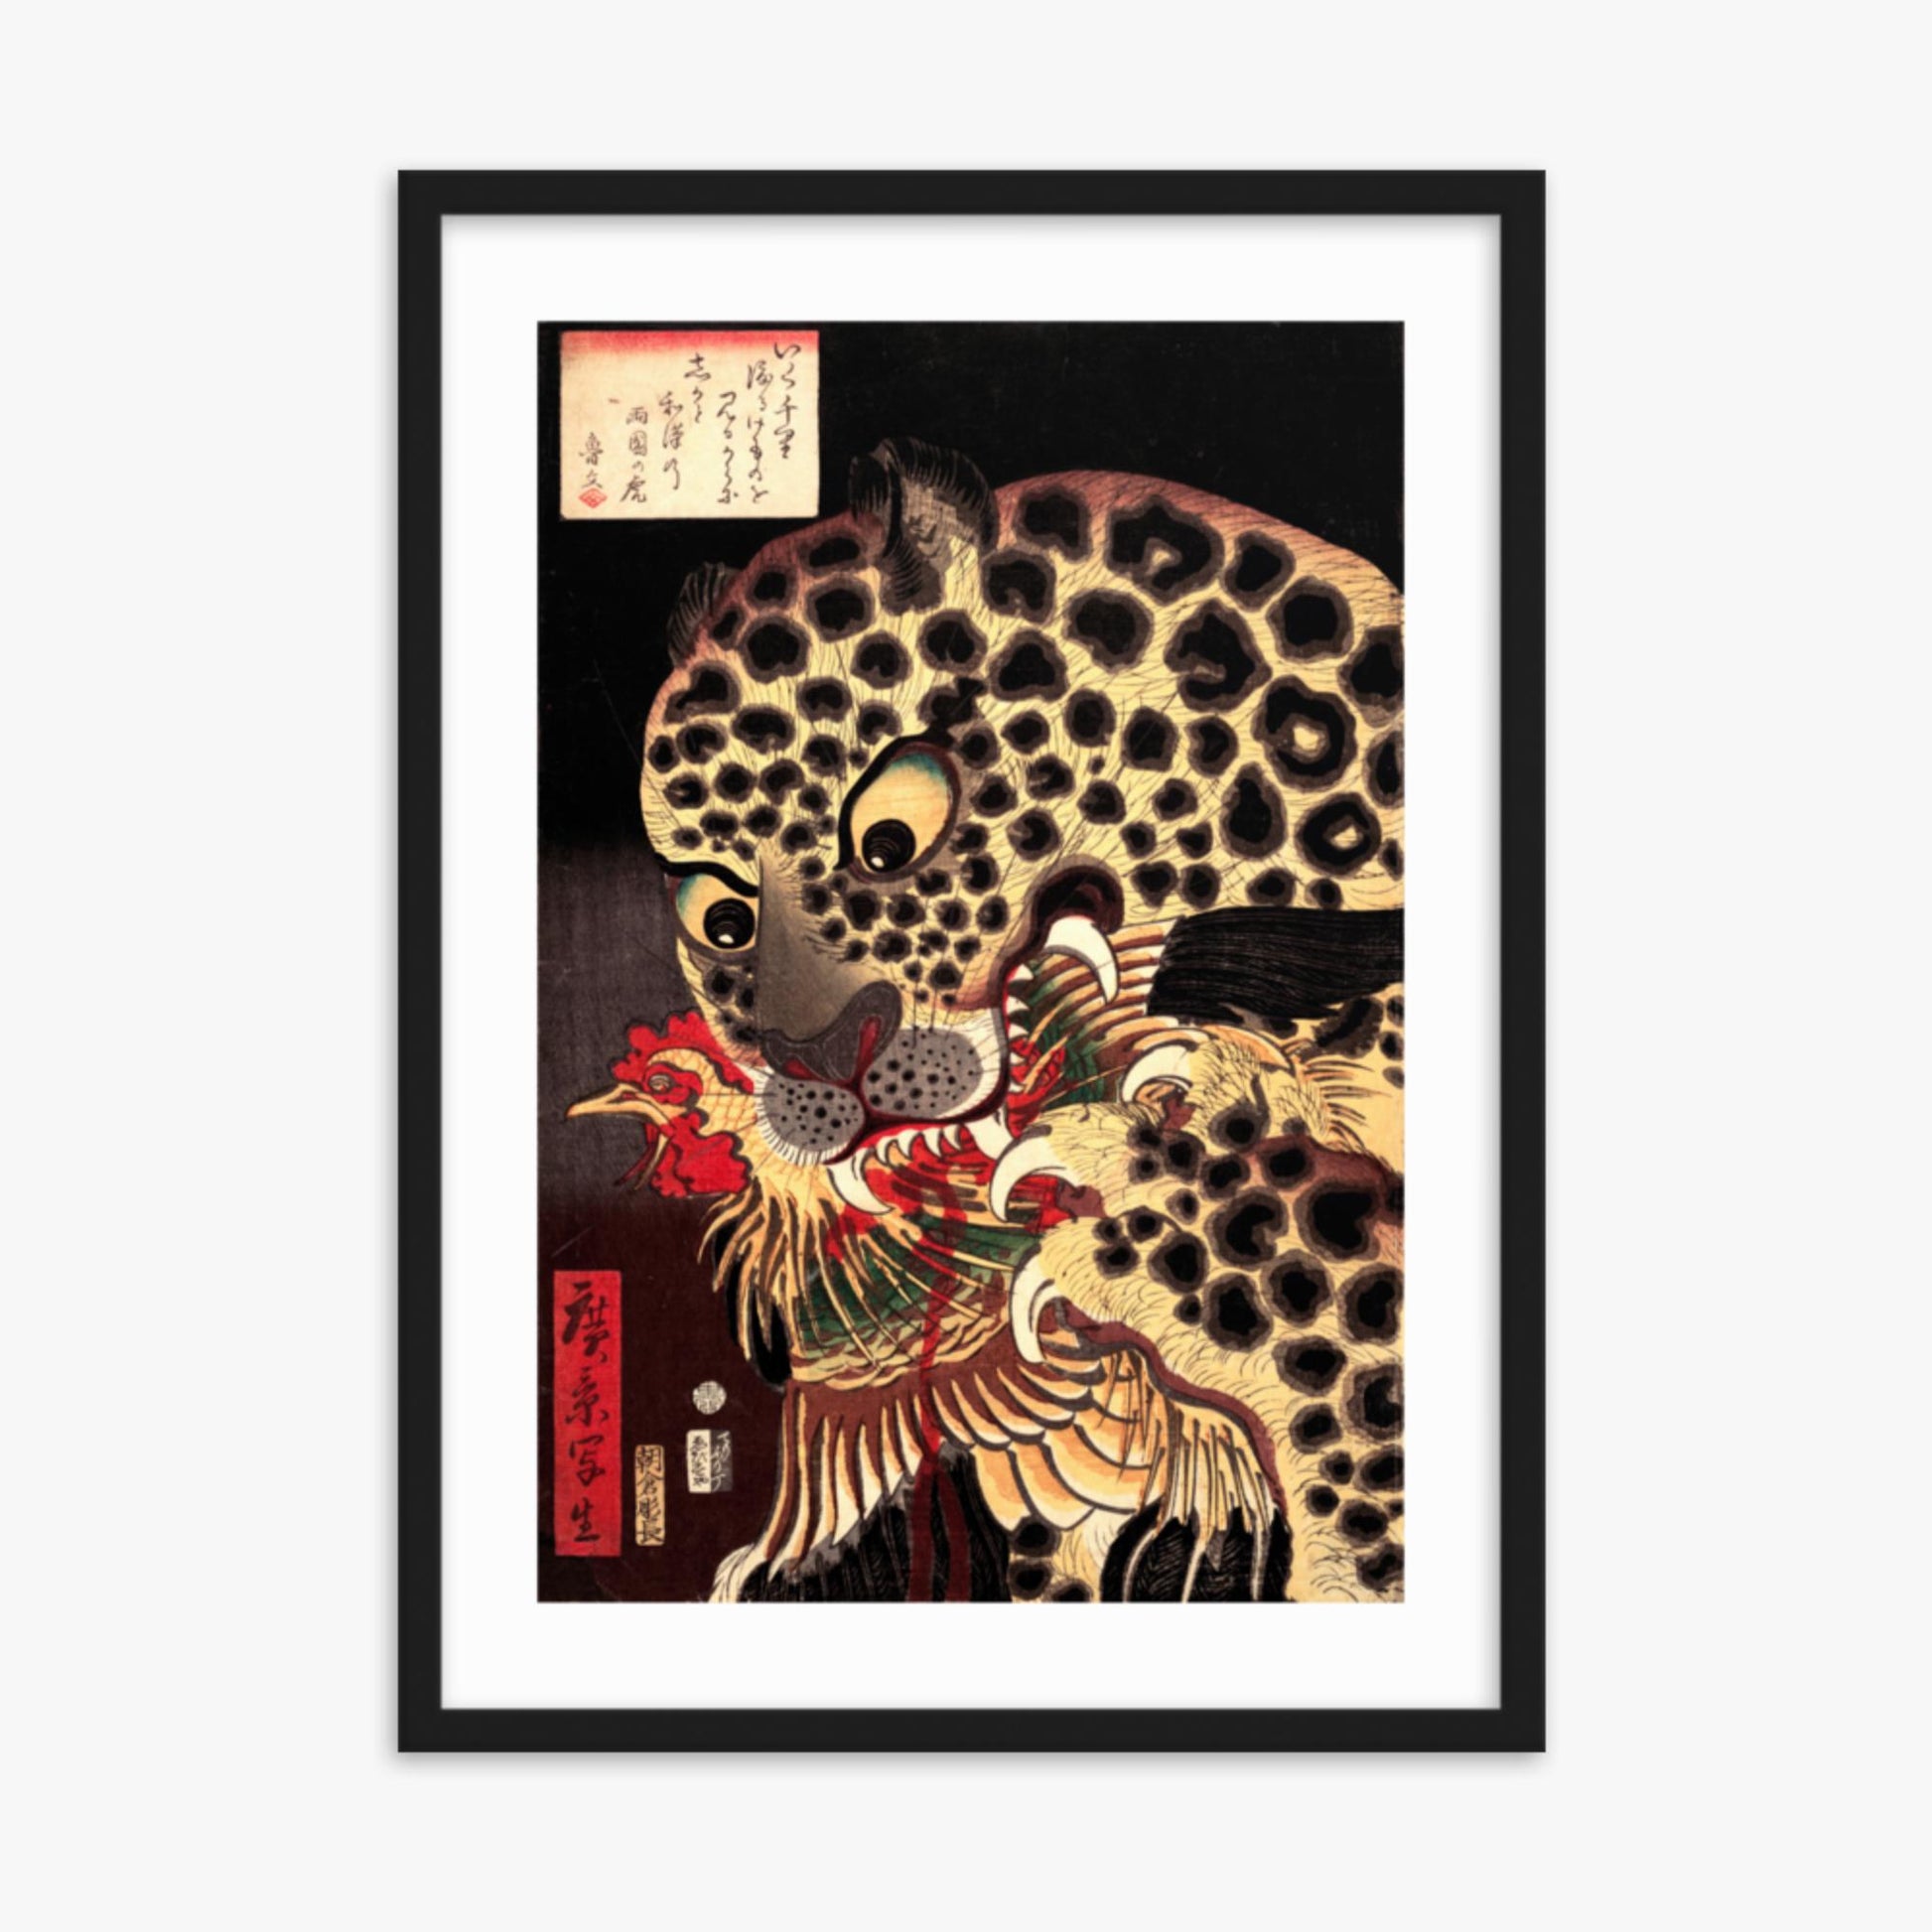 Utagawa Hirokage - The Tiger of Ryōkoku 50x70 cm Poster With Black Frame